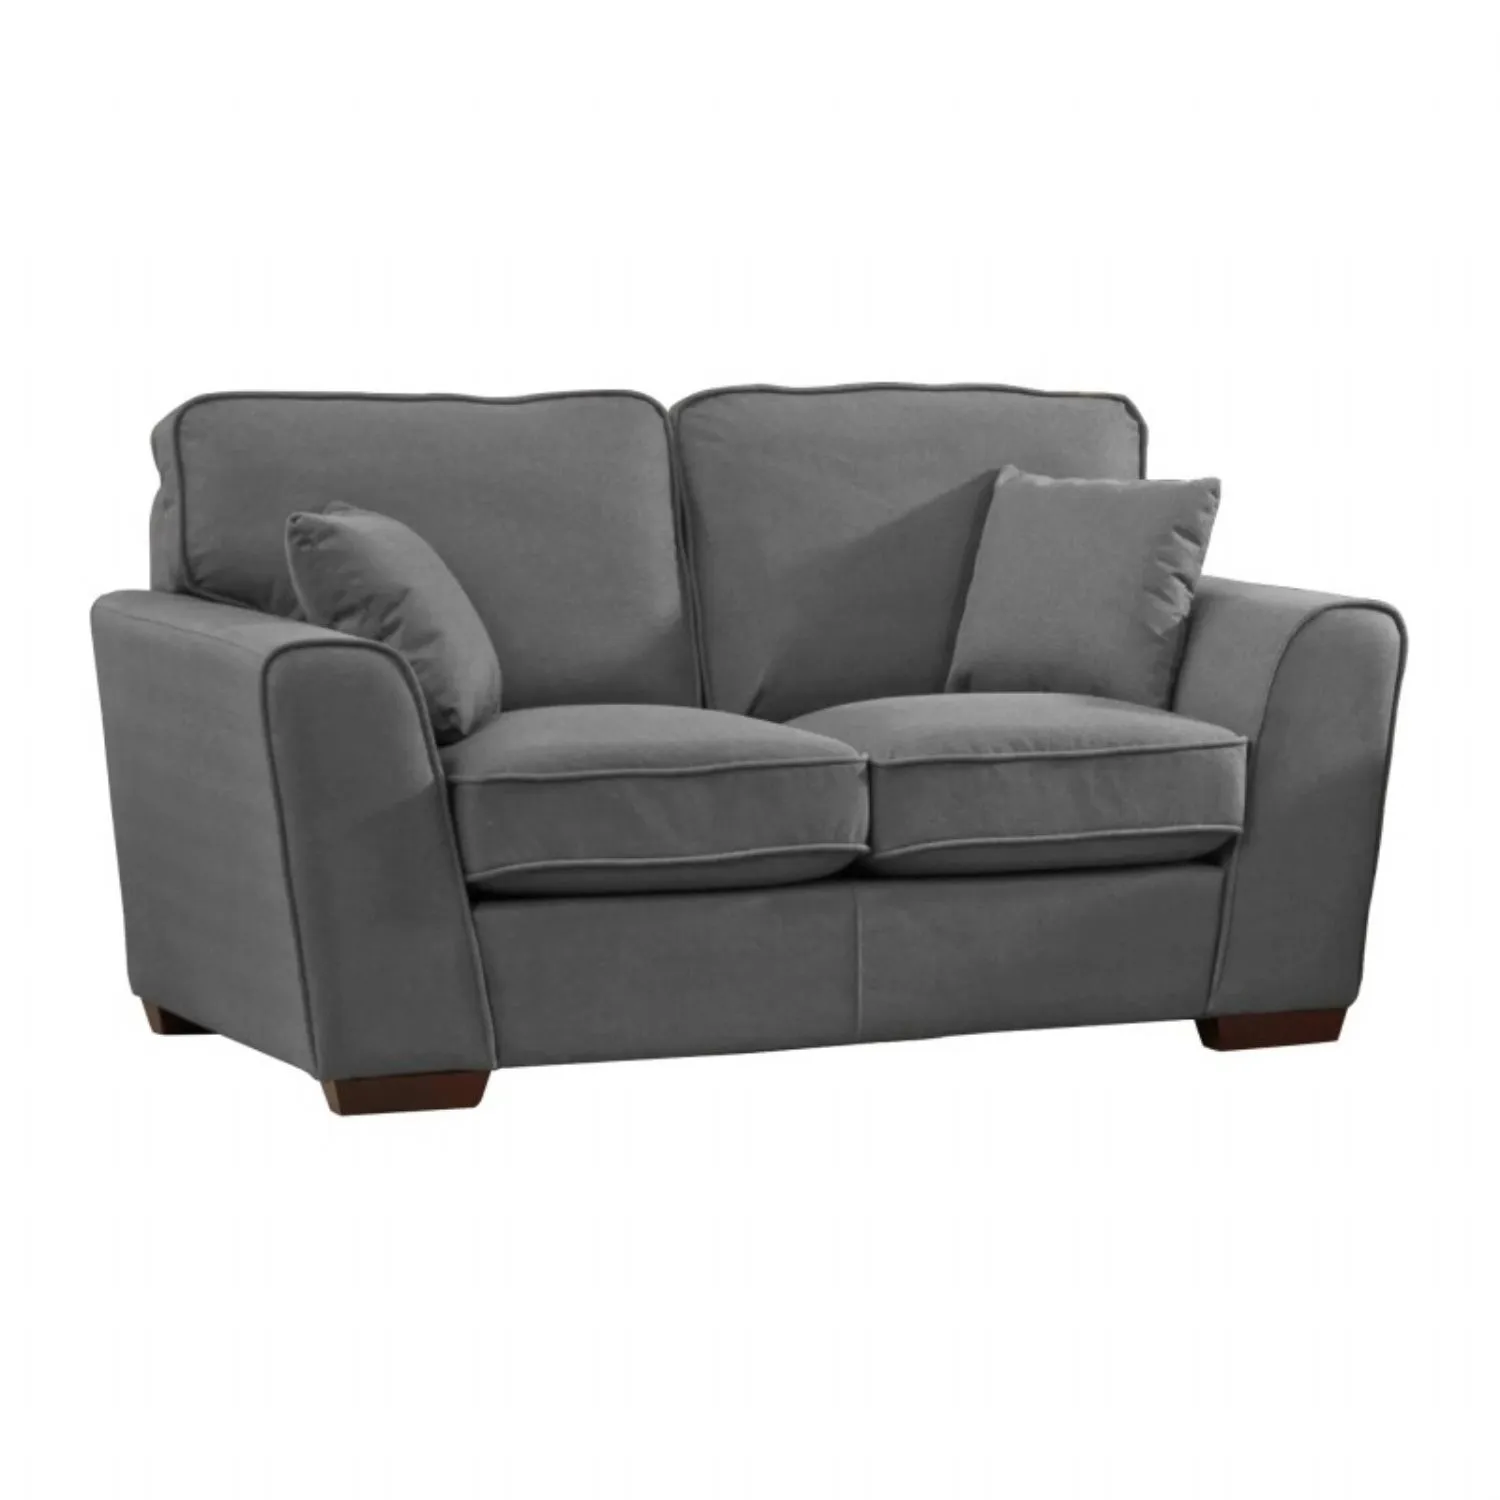 Herringbone Patterned Fabric 2 Seat Sofas